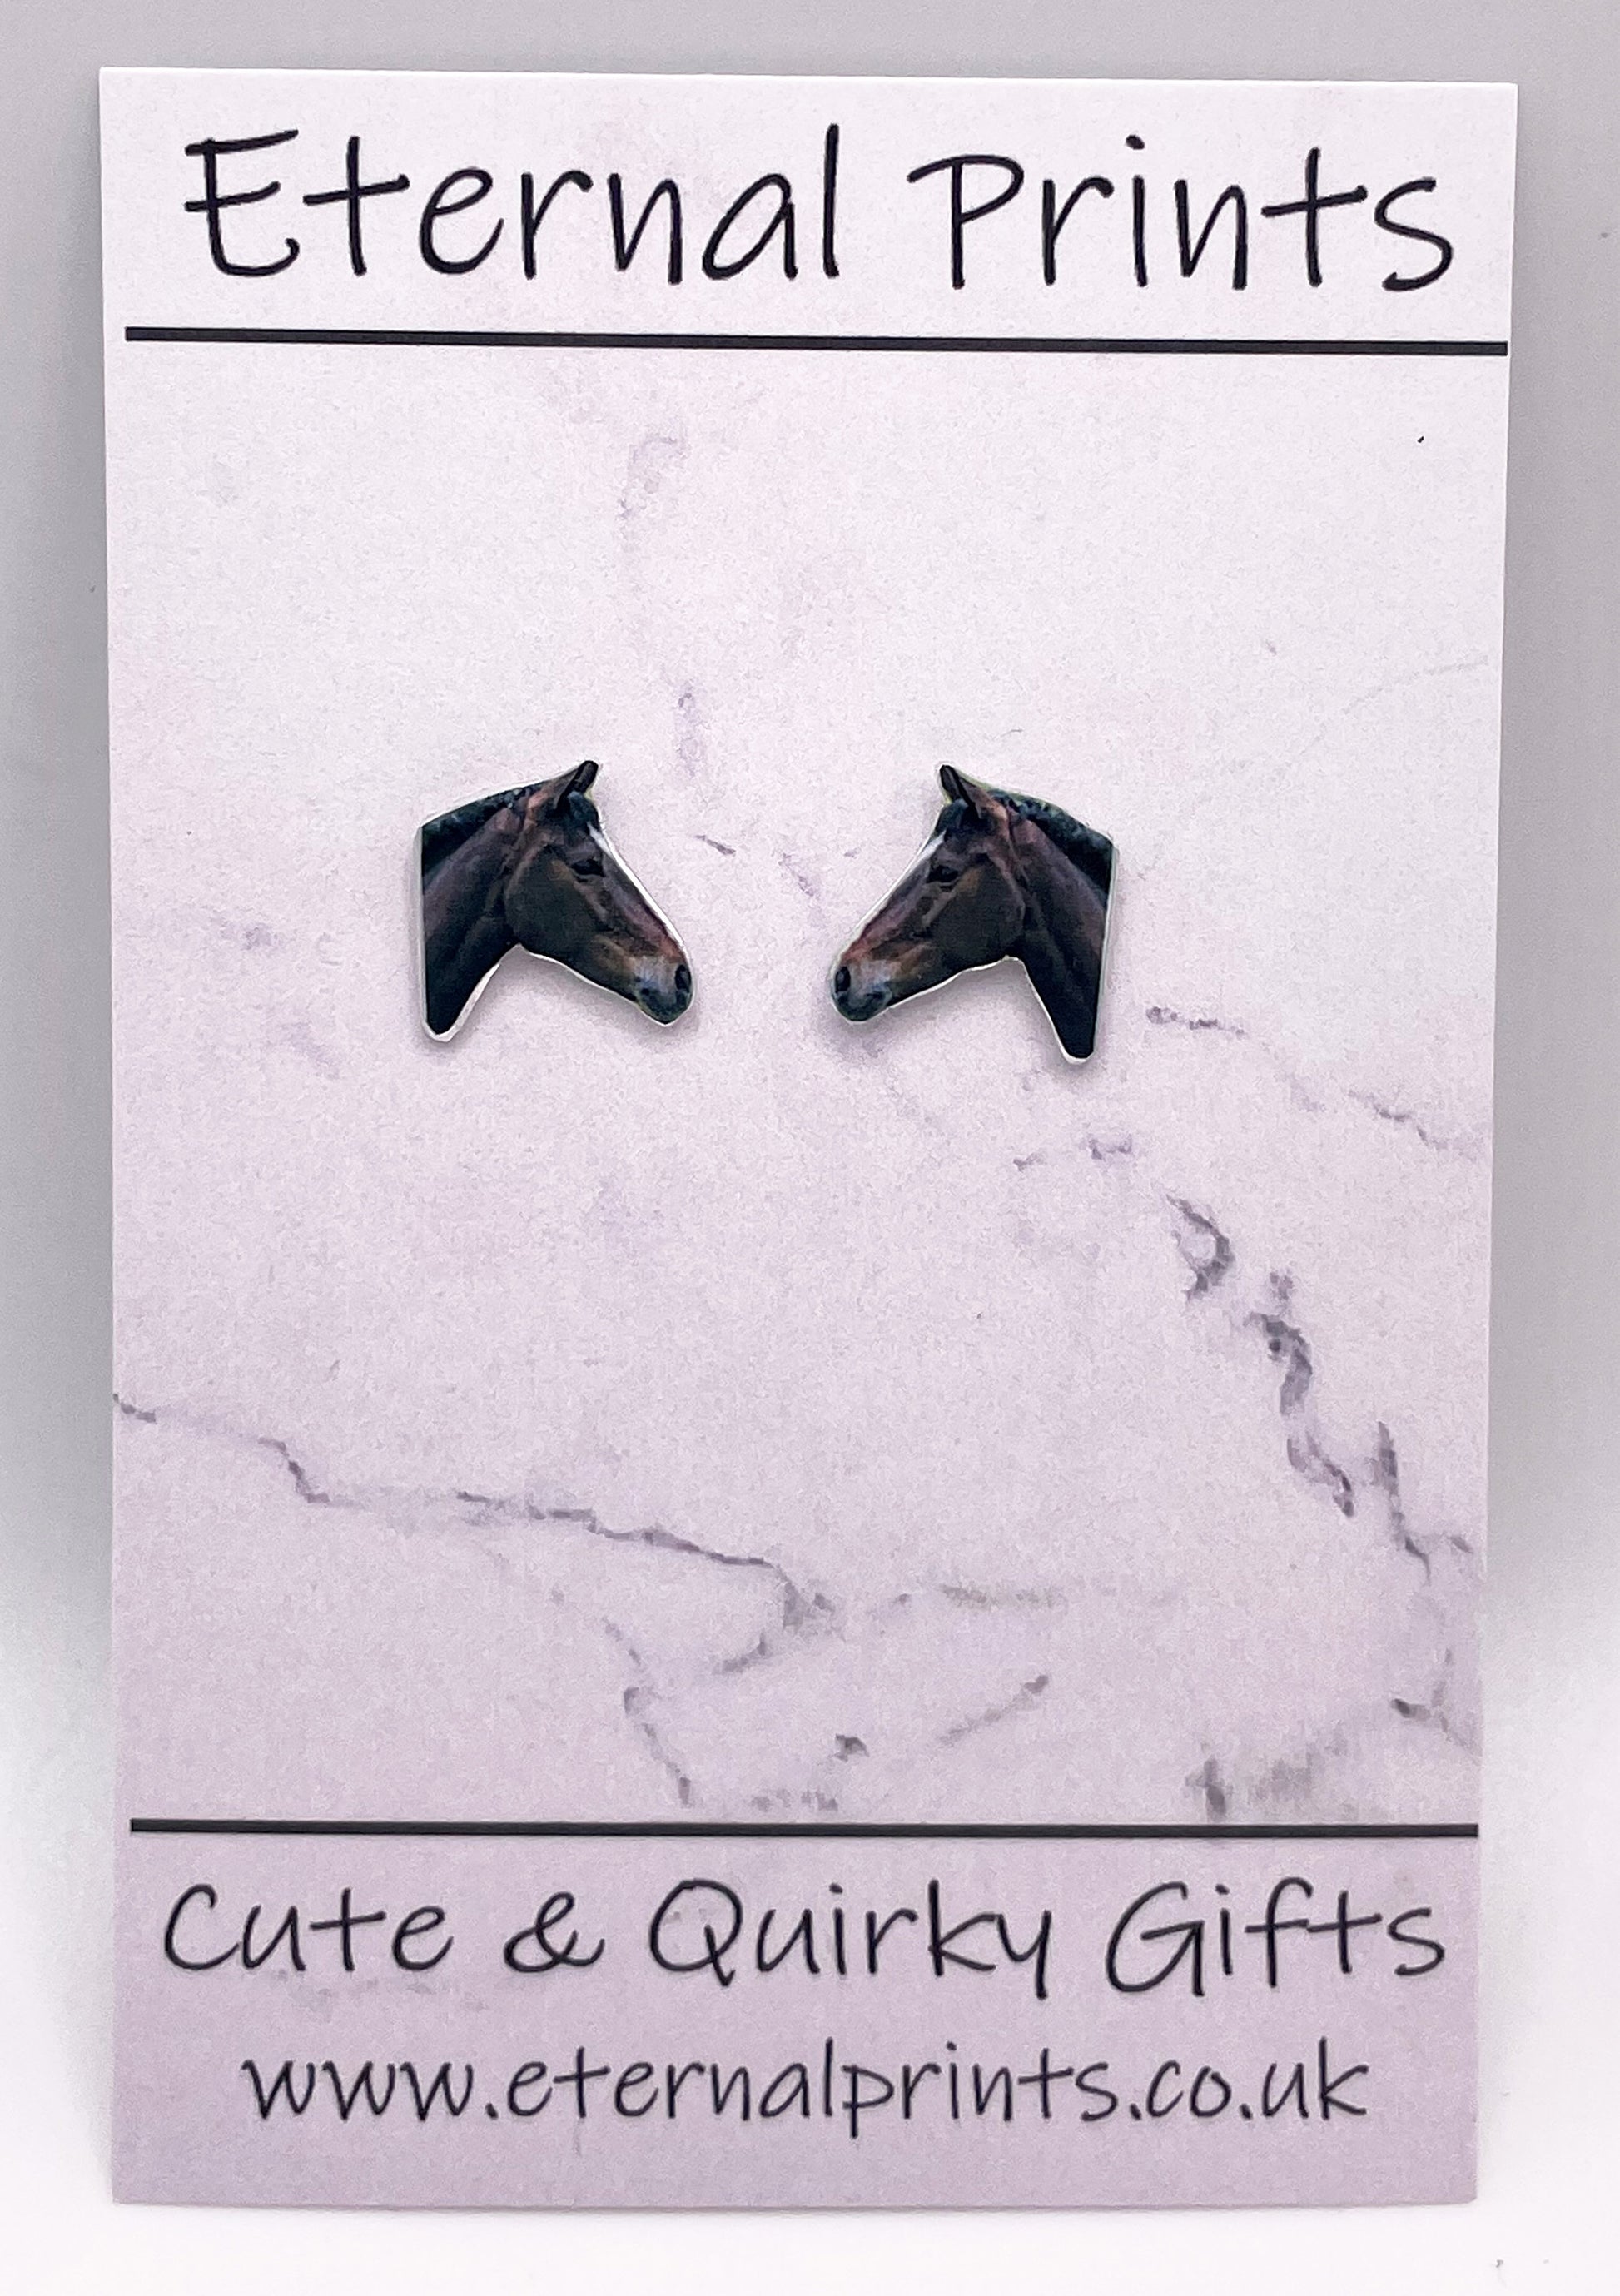 Horse Stud Earrings - Horse Lovers - Horse Gift - Horse Earrings - Pony Studs - My Pet Studs